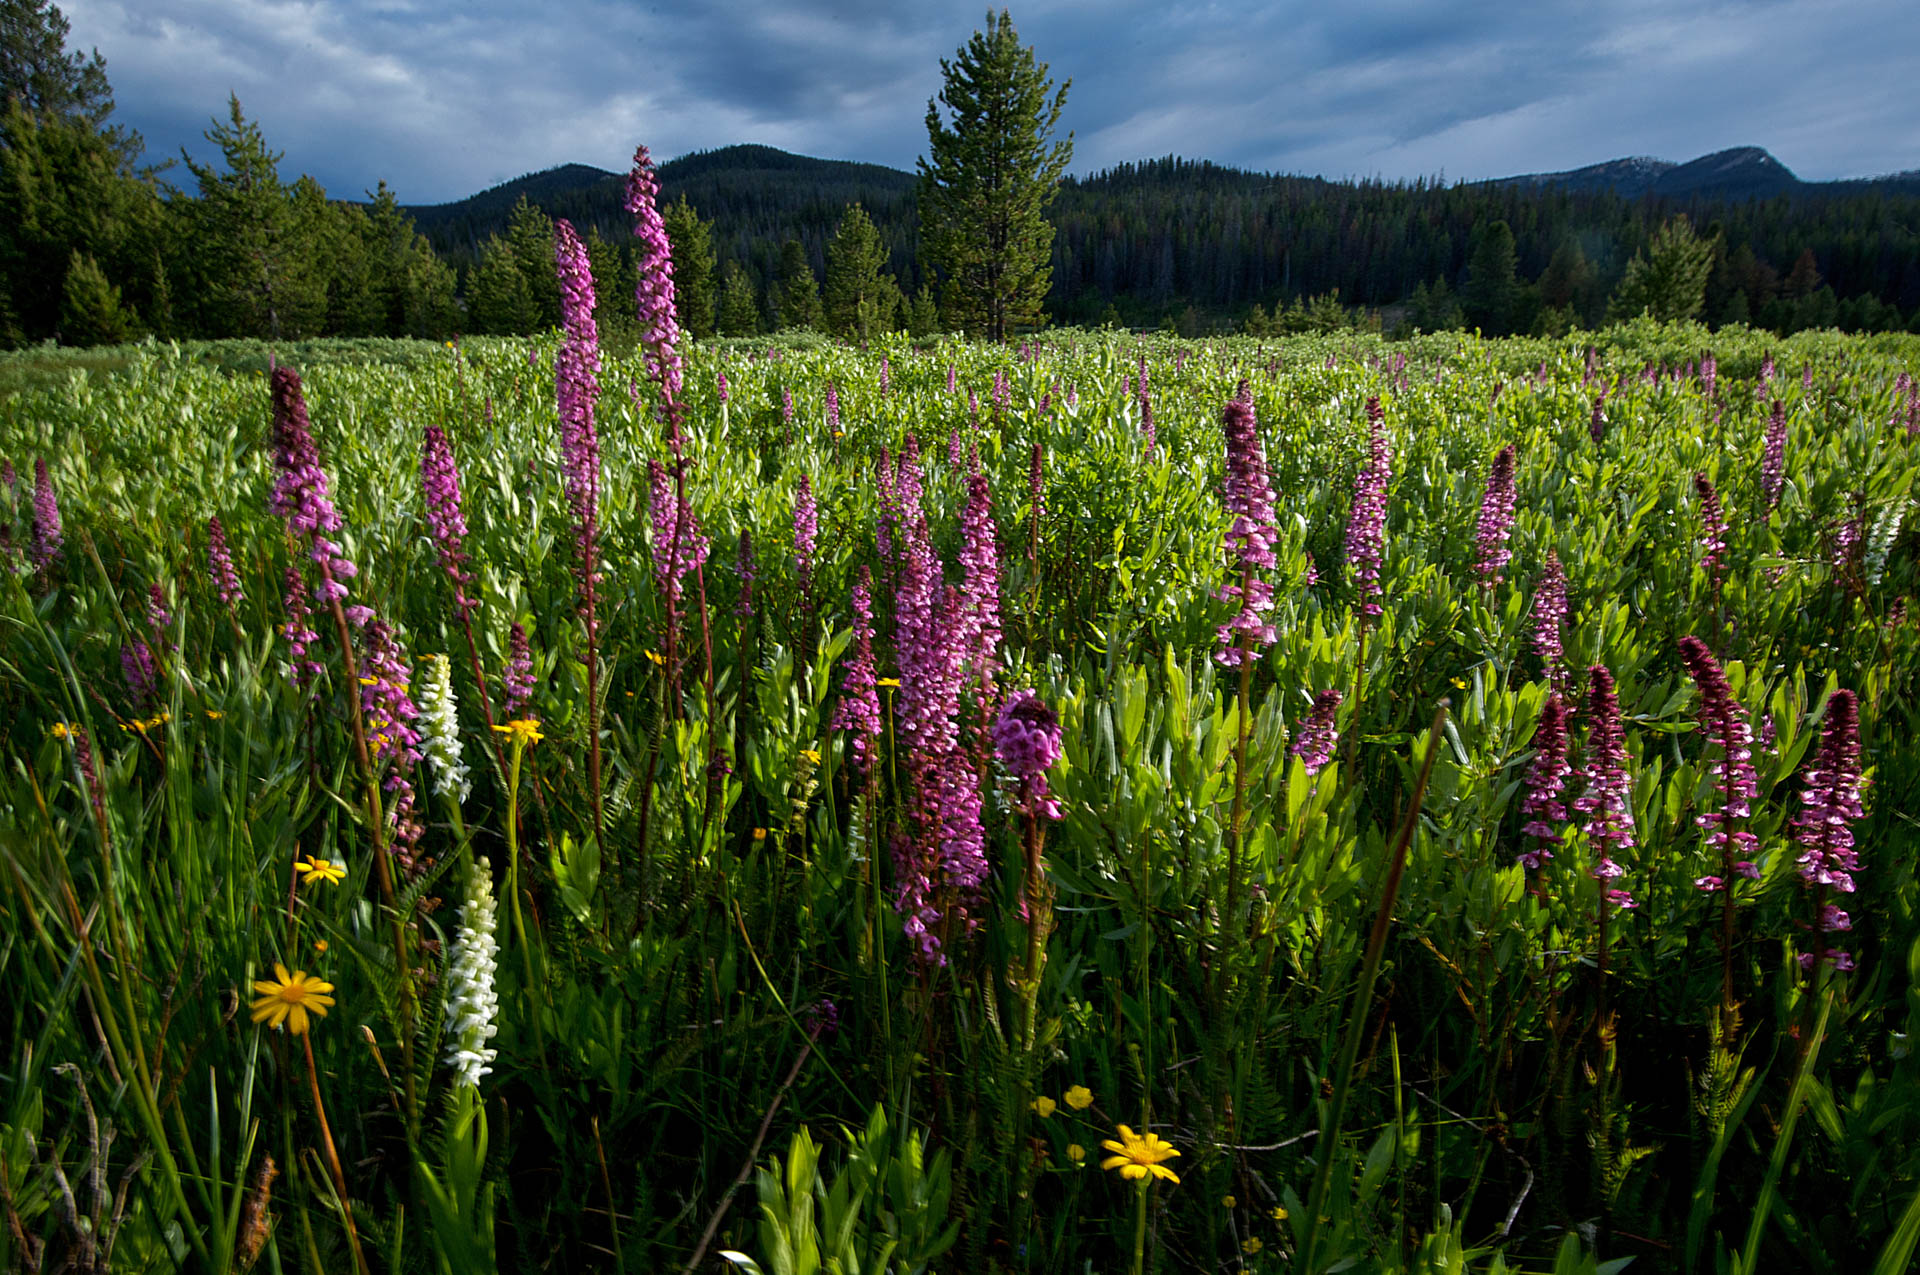 Elephantella or Elephant Head wildflowers. Pedicularis groenlandica. Idaho, USA.